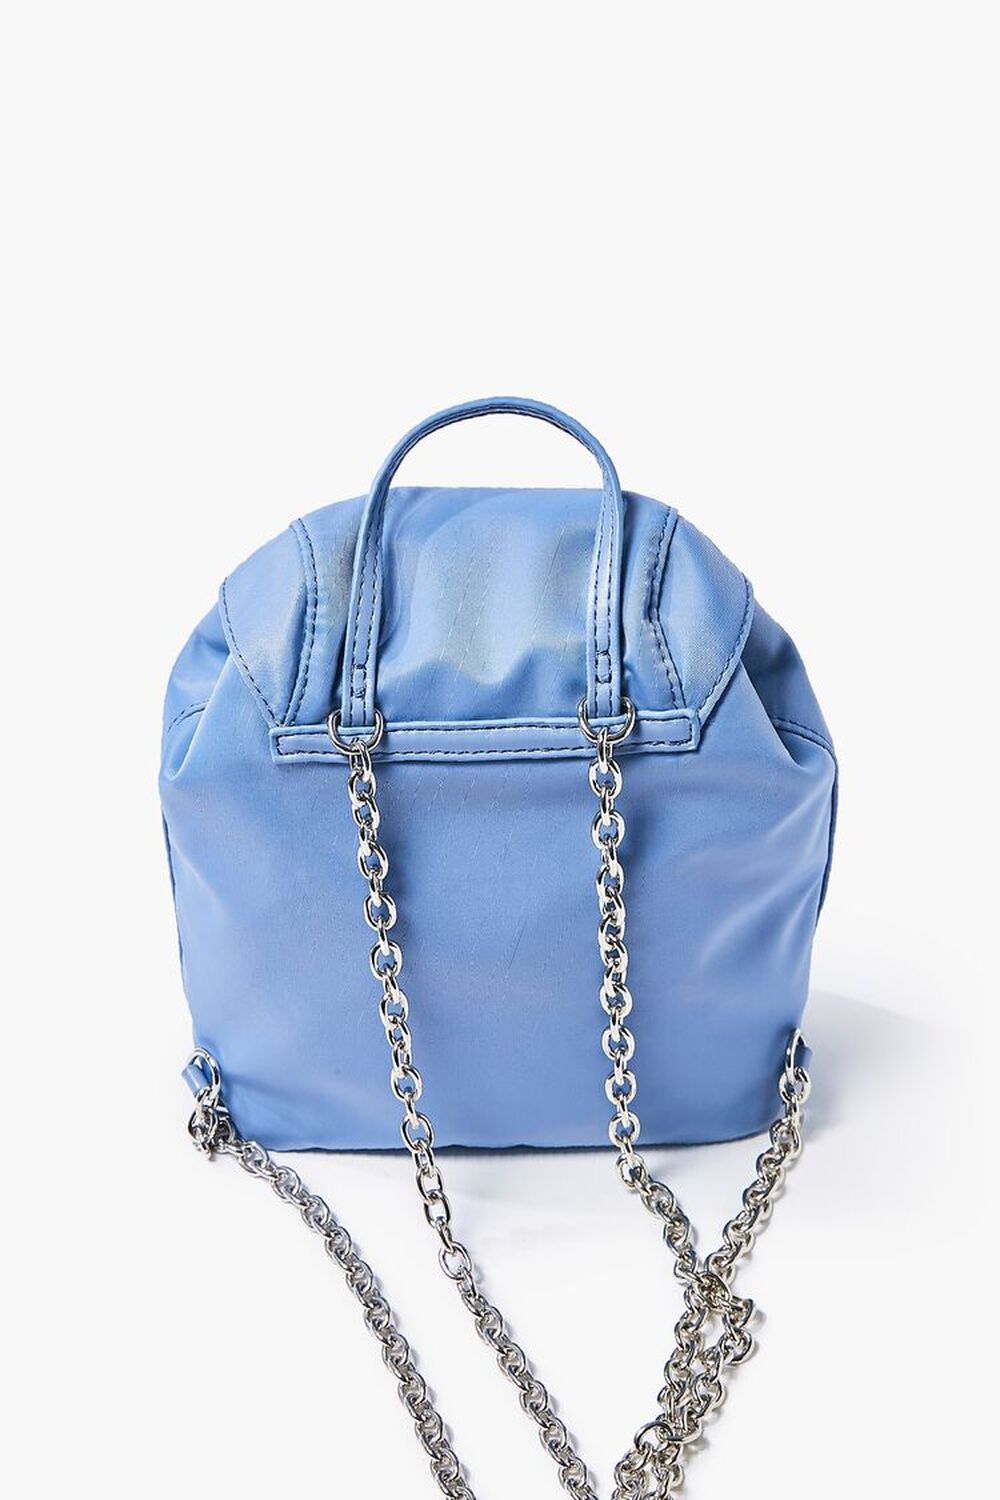 BLUE Drawstring Flap-Top Backpack, image 3